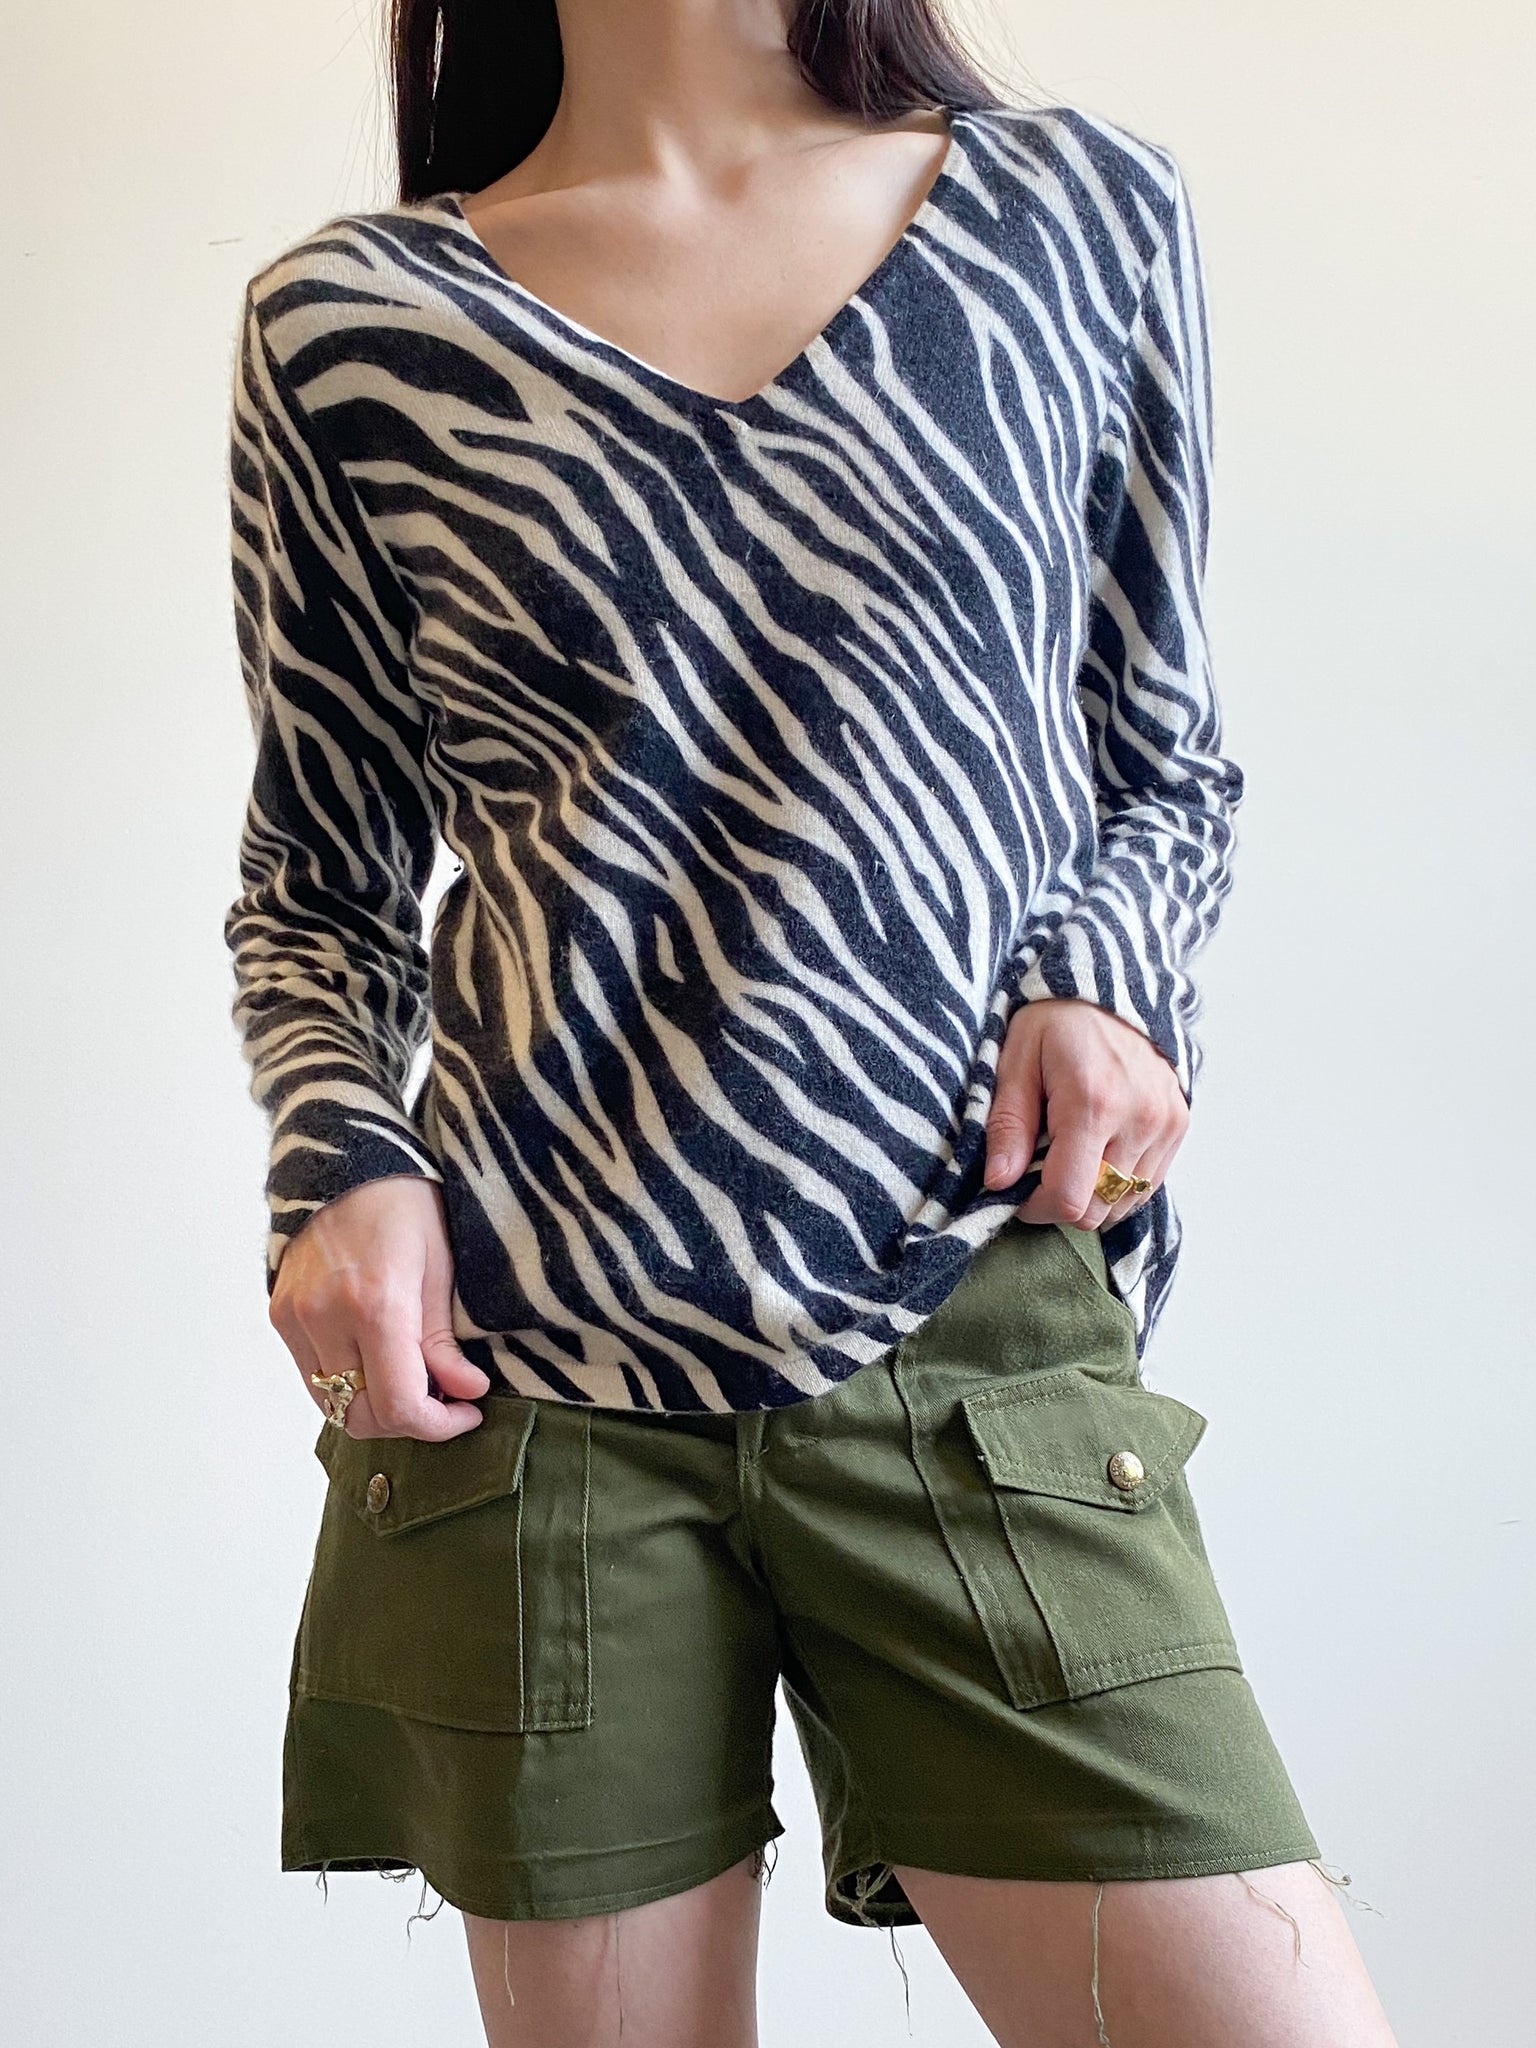 Charter Club Zebra Print Cashmere Sweater (M)